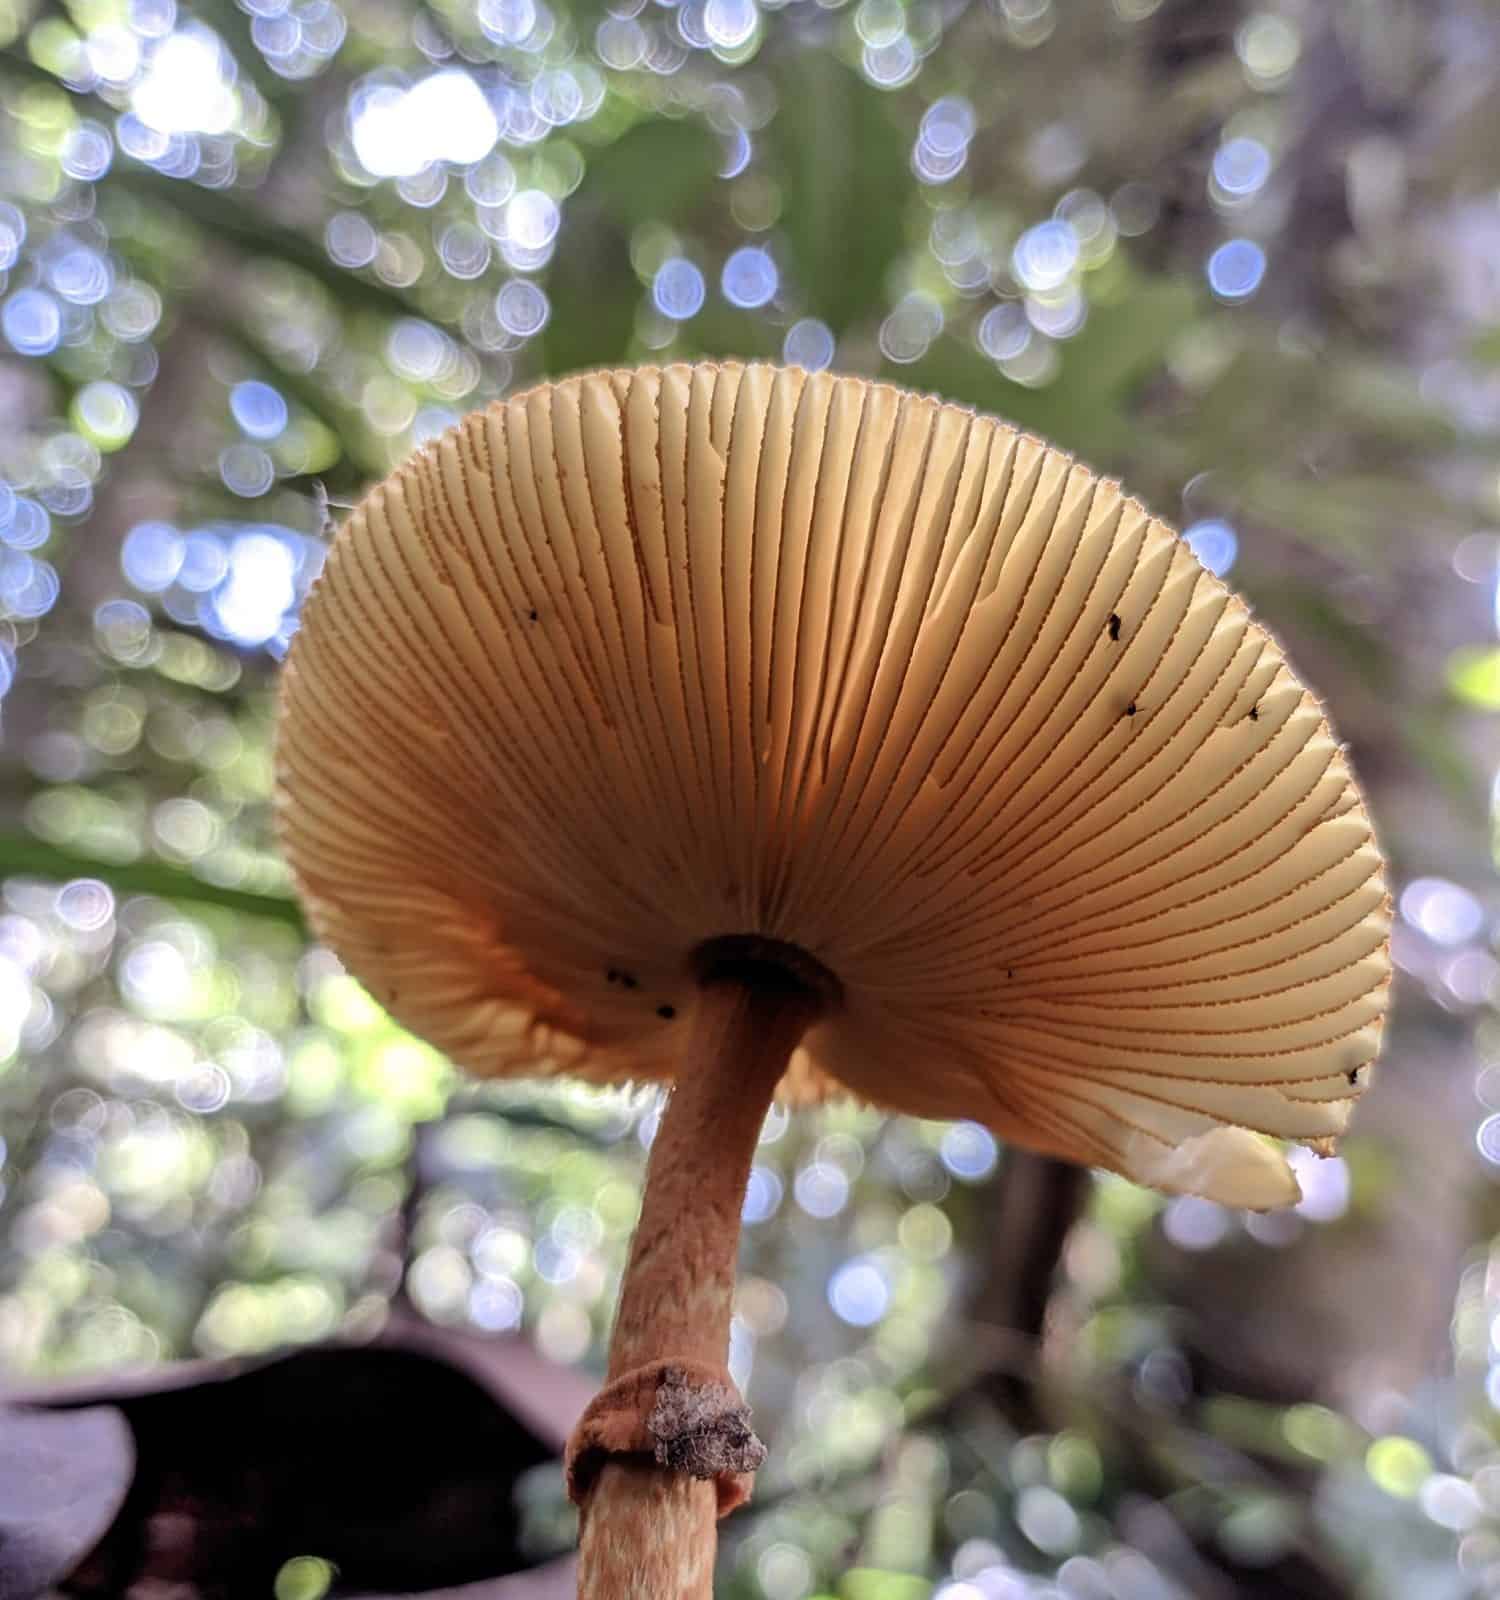 Macro photo of Amanita subjunquillea mushroom taken from below